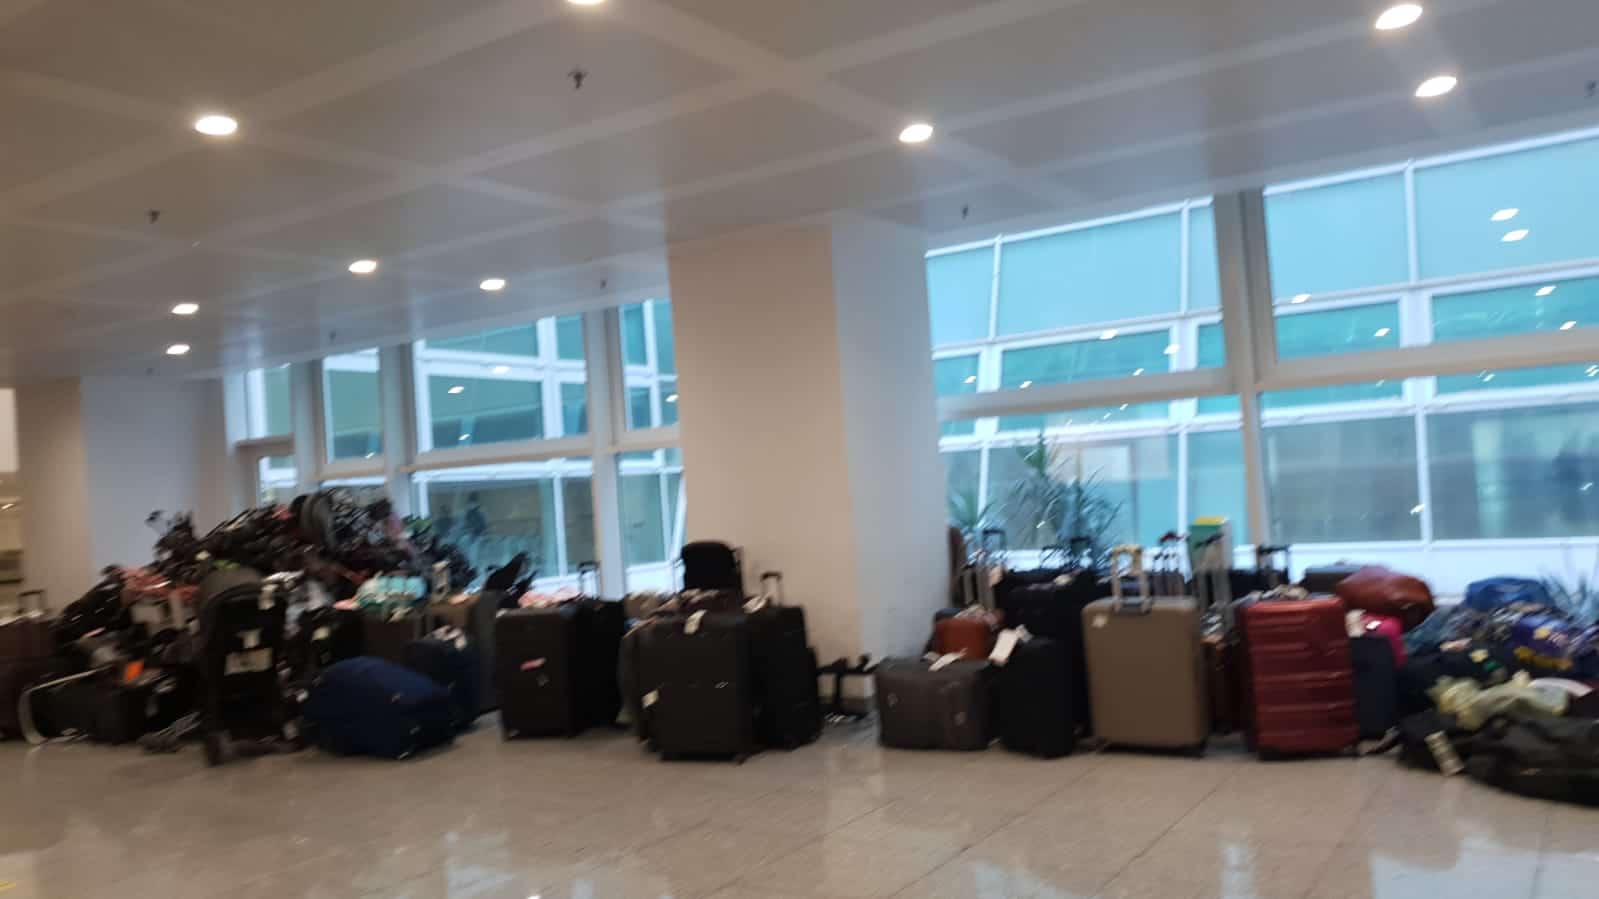 Aéroport d'Alger djalia-dz 